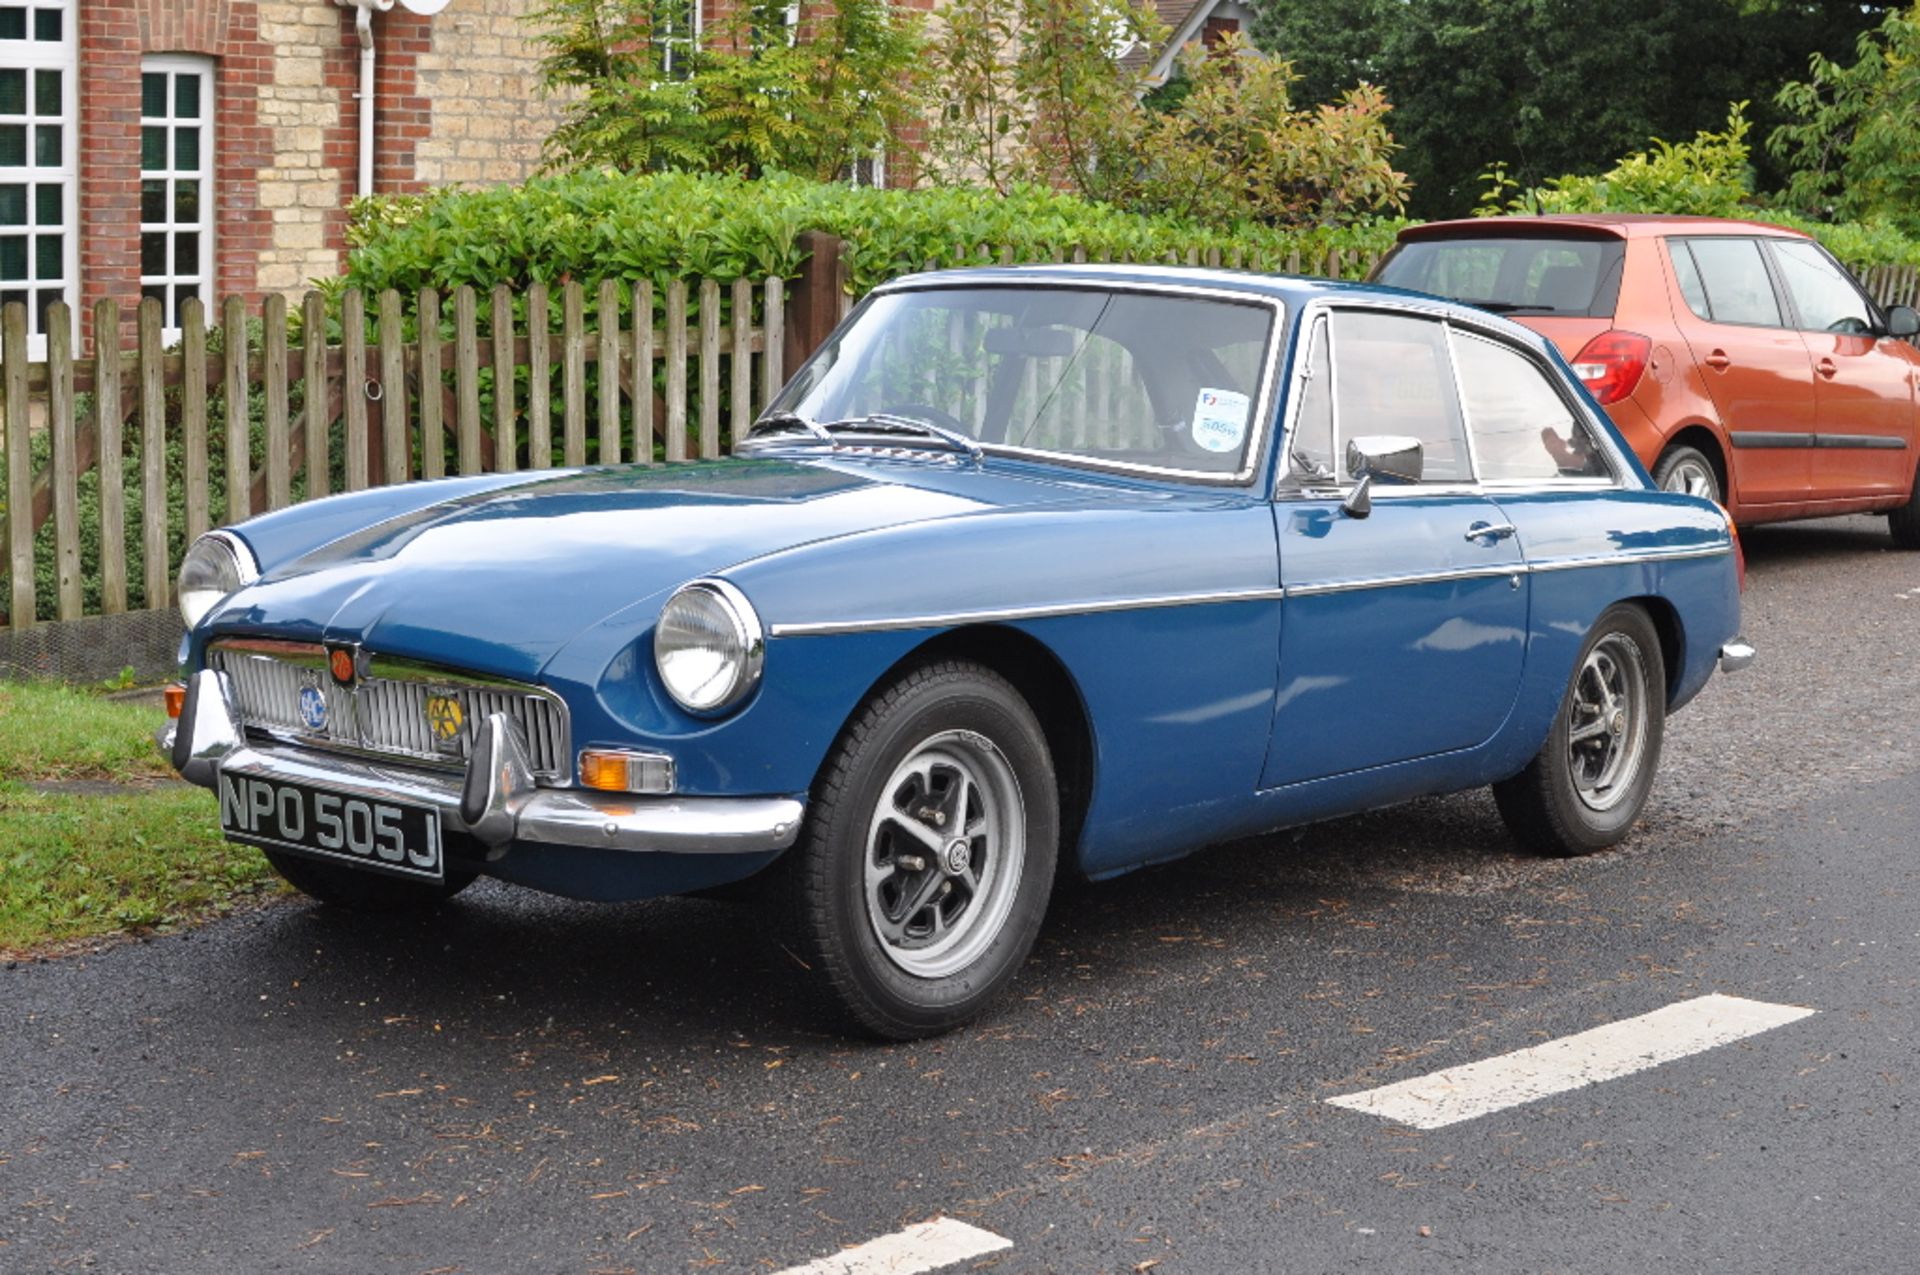 A 1971 MG B GT, registration number NPO 505J, teal blue.